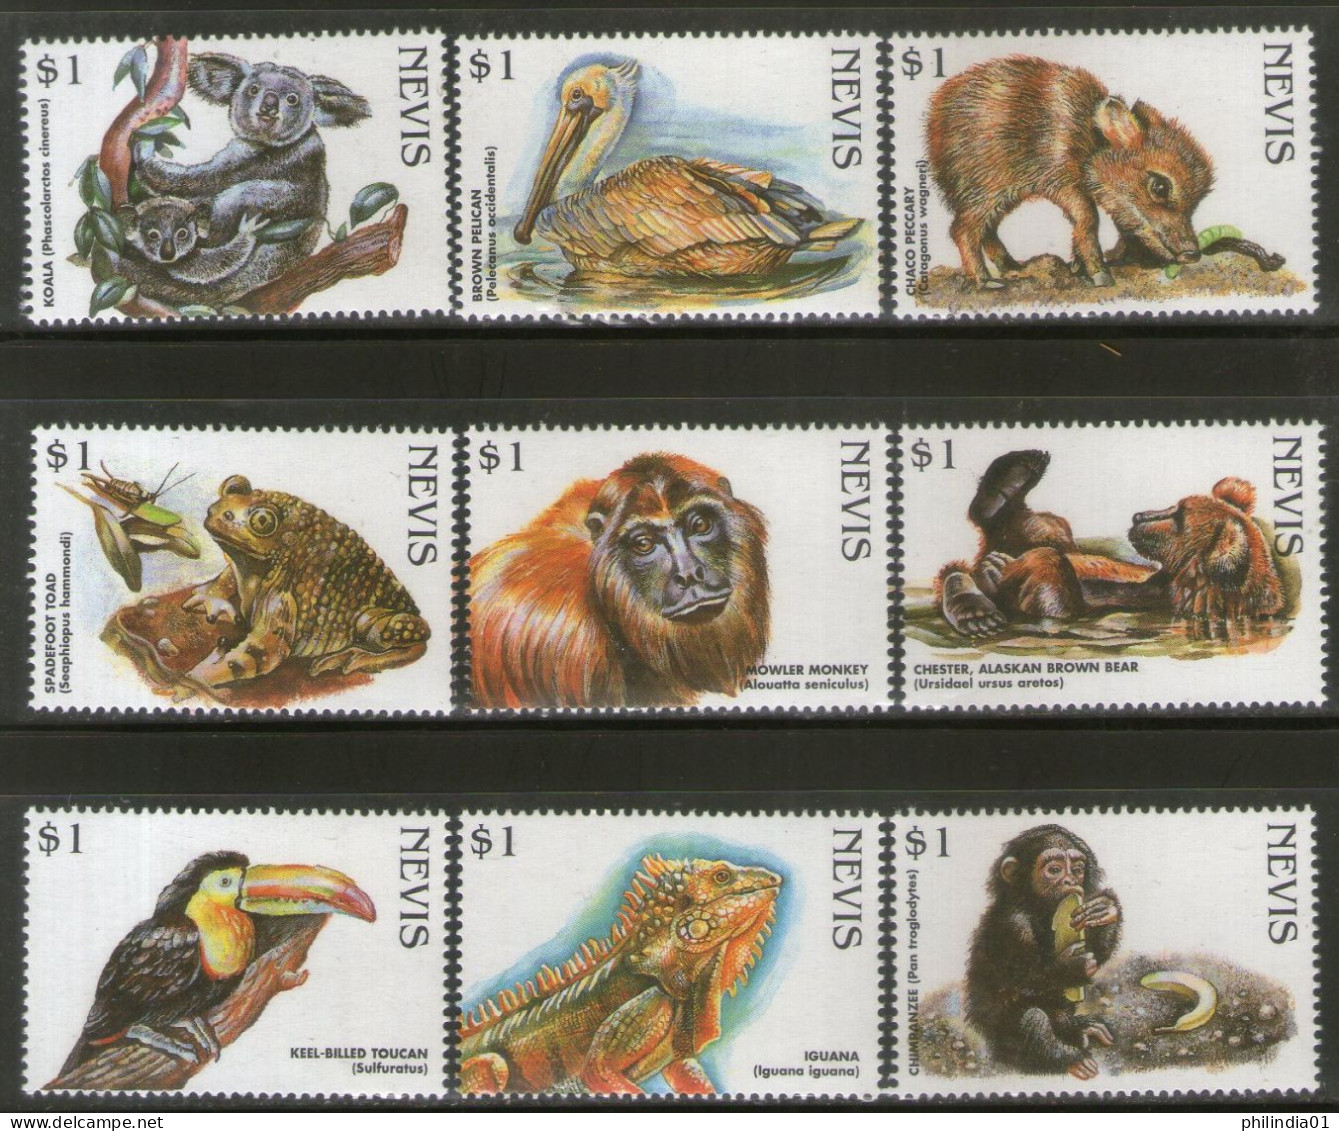 Nevis 1998 Endangered Species Birds Monkey Bear Wildlife Animals Sc 1073 9v MNH # 196 - Singes